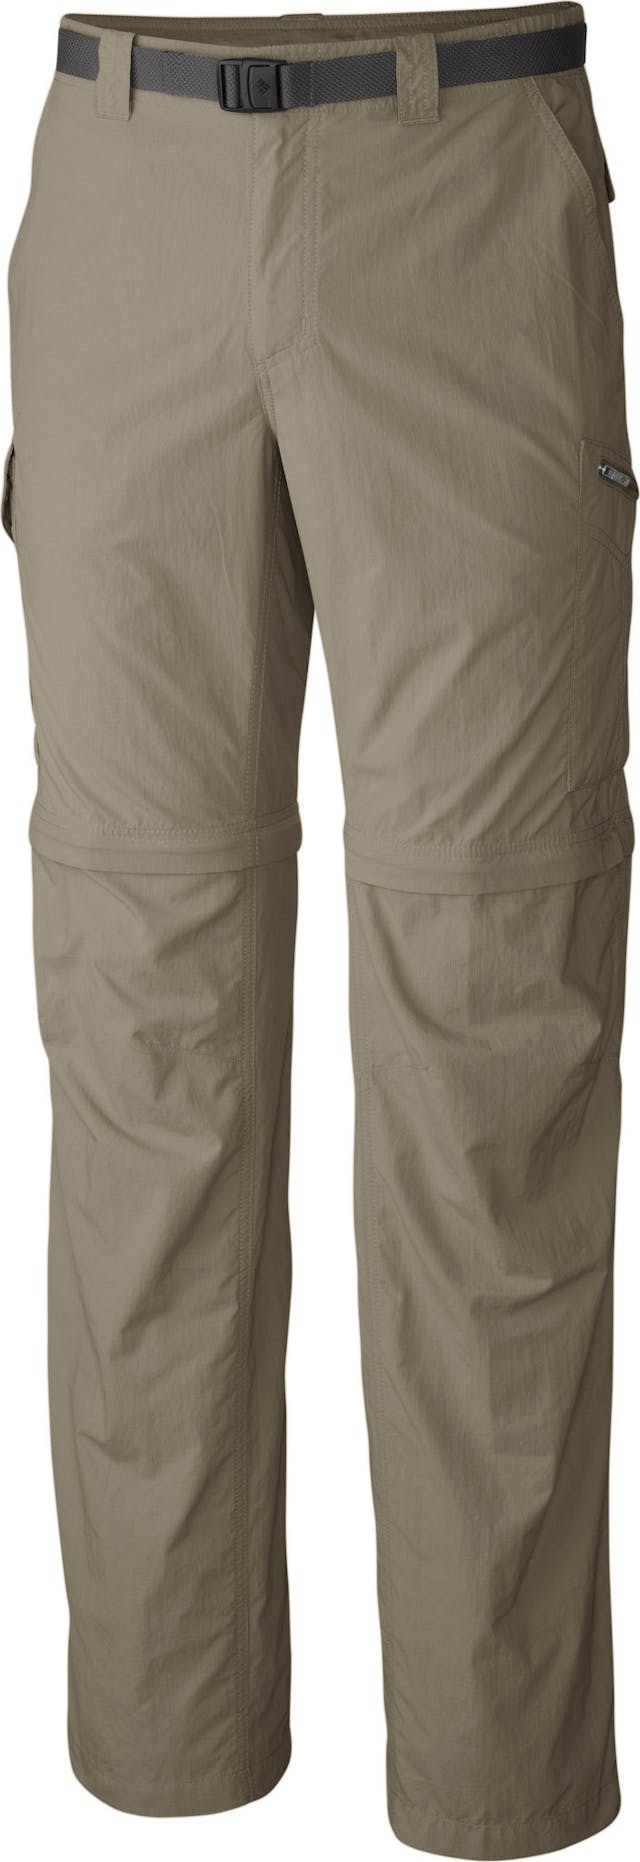 Product image for Silver Ridge Convertible Pant - Men's